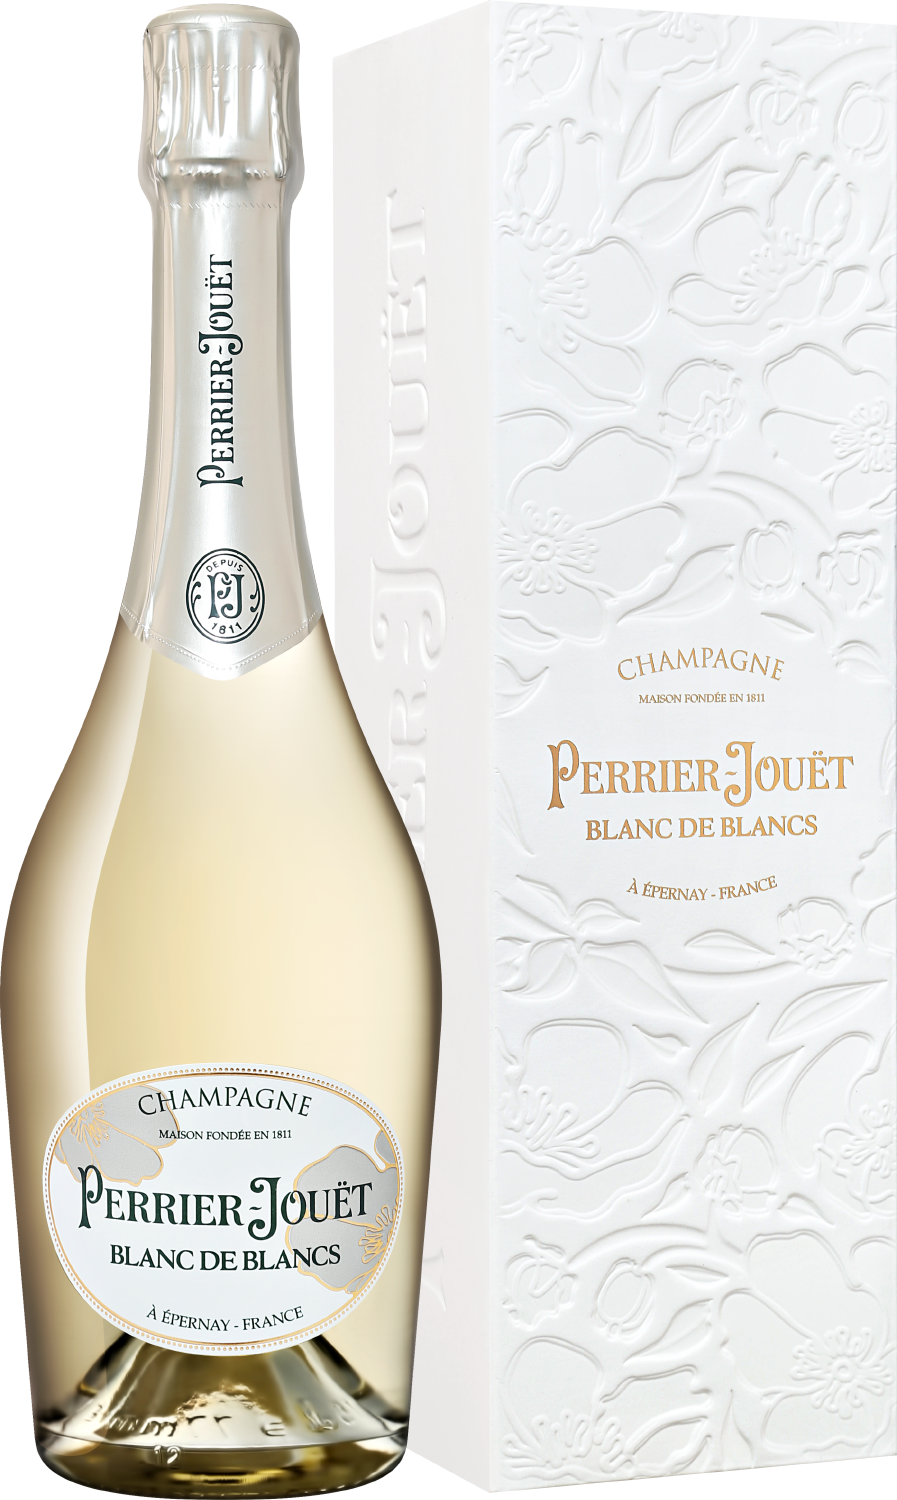 Perrier-Jouet Blanc De Blancs Champagne AOC Brut perrier jouet belle epoque blanc de blancs 2012 champagne aoc brut gift box